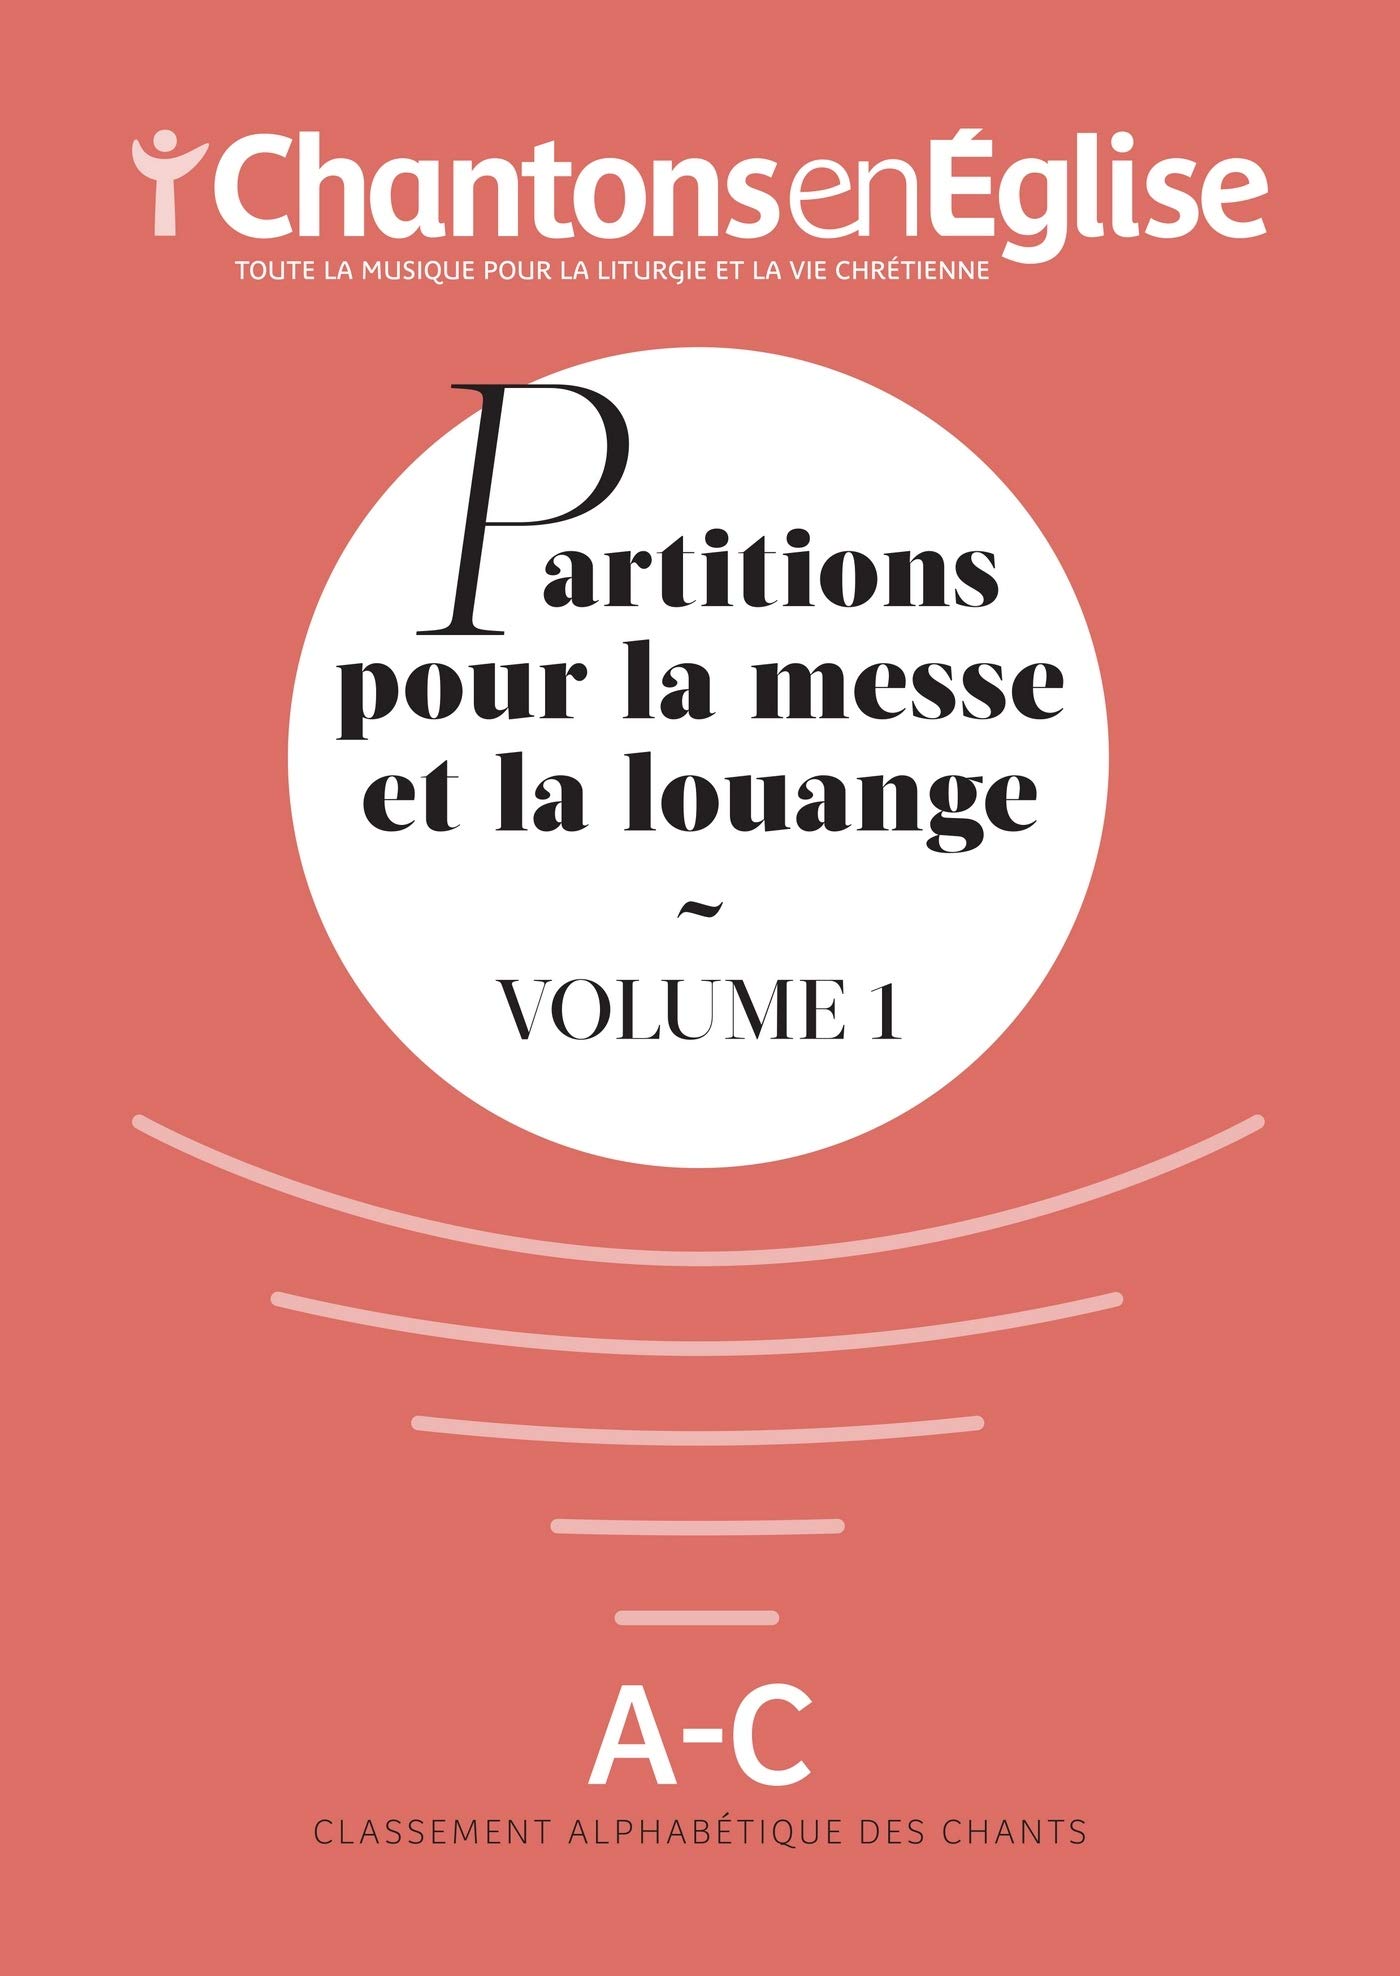 Libri Various - Chantons En Eglise : Partitions Pour La Messe Et La Louange Vol. 1 NUOVO SIGILLATO, EDIZIONE DEL 28/04/2017 SUBITO DISPONIBILE